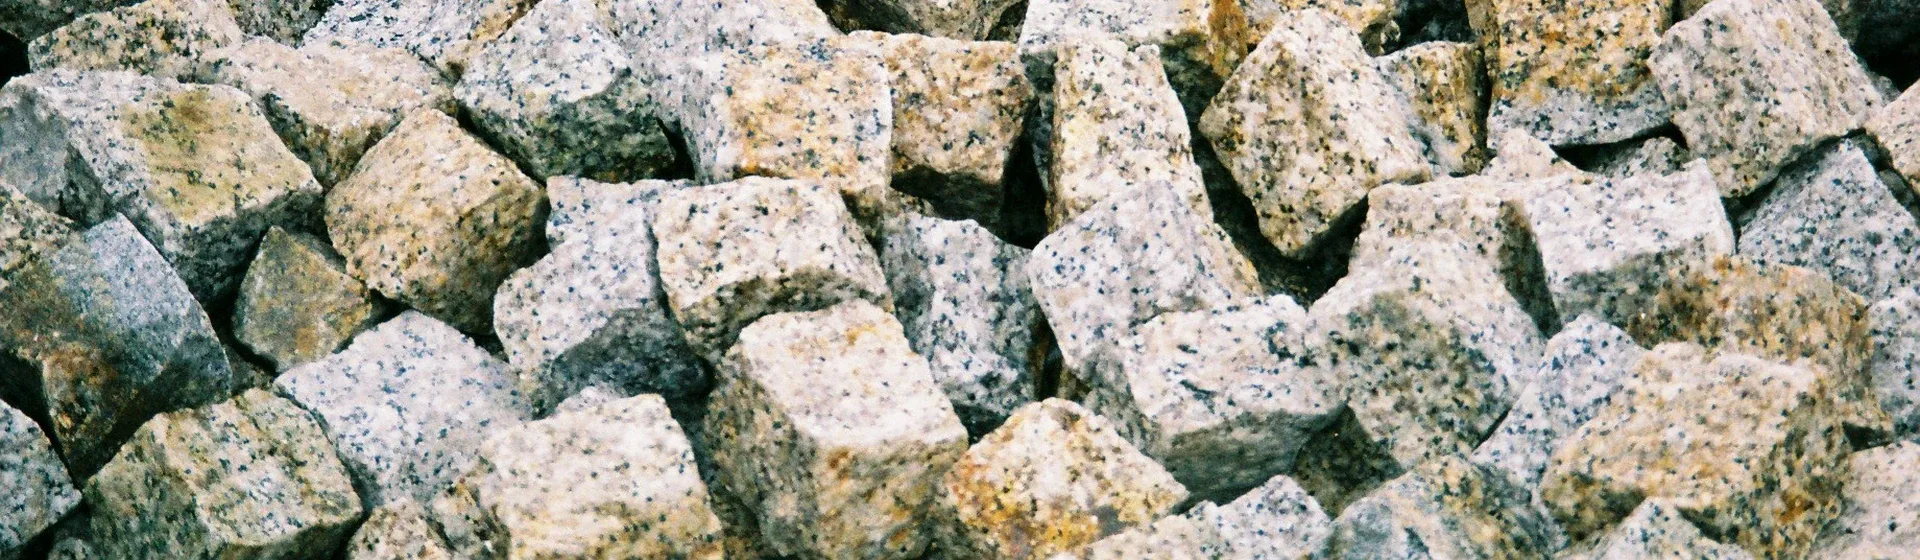 kamienie granitowe